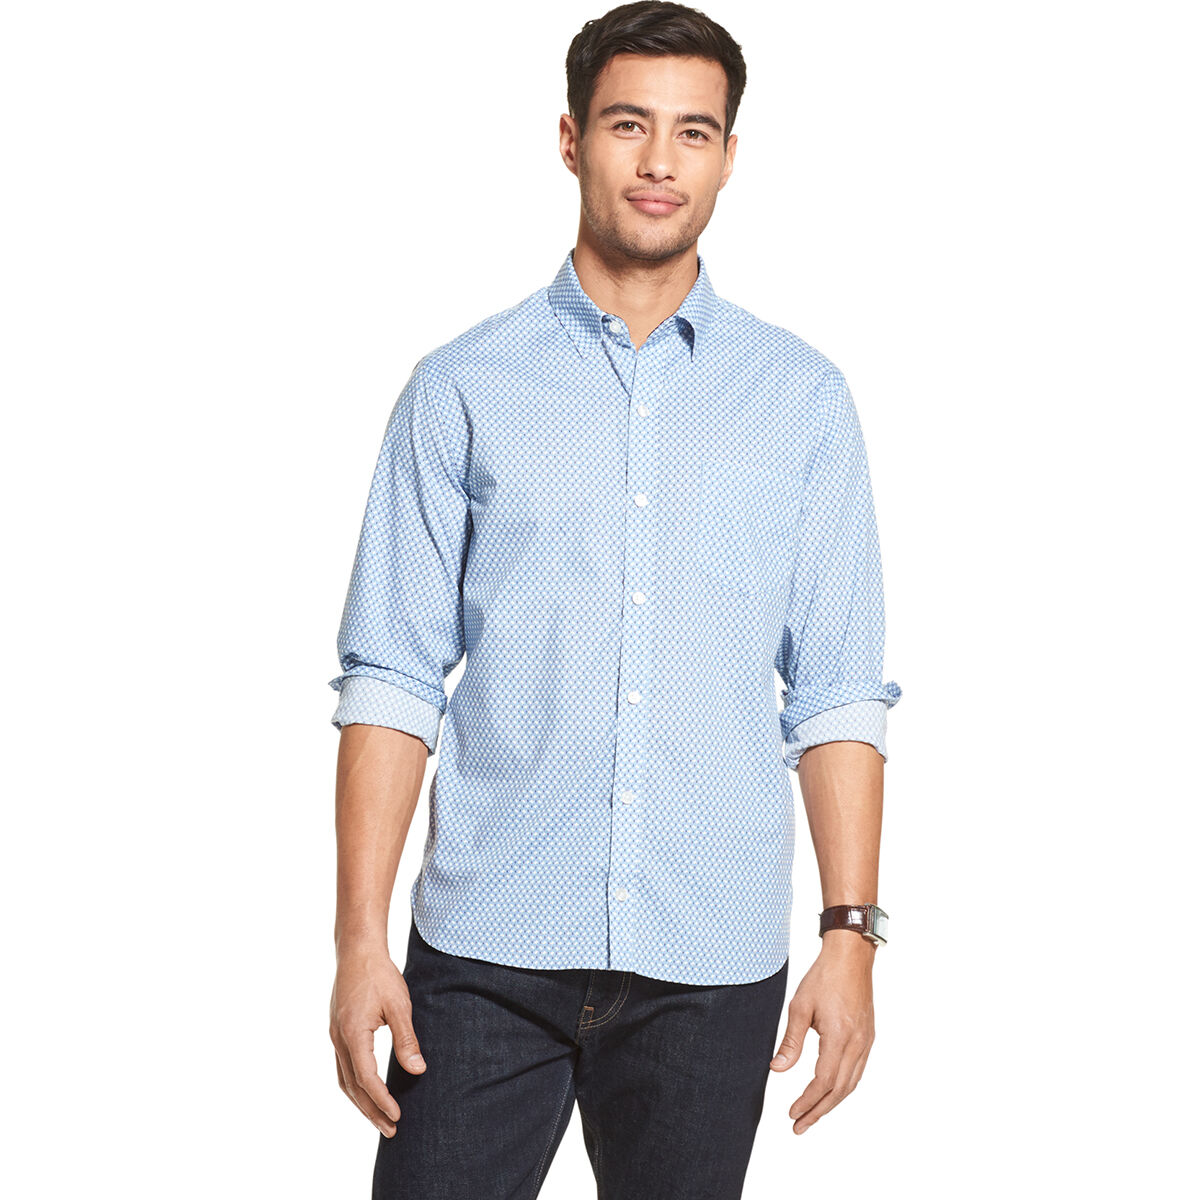 Van Heusen Men's Never Tuck Long-Sleeve Slim Fit Shirt - Blue, M